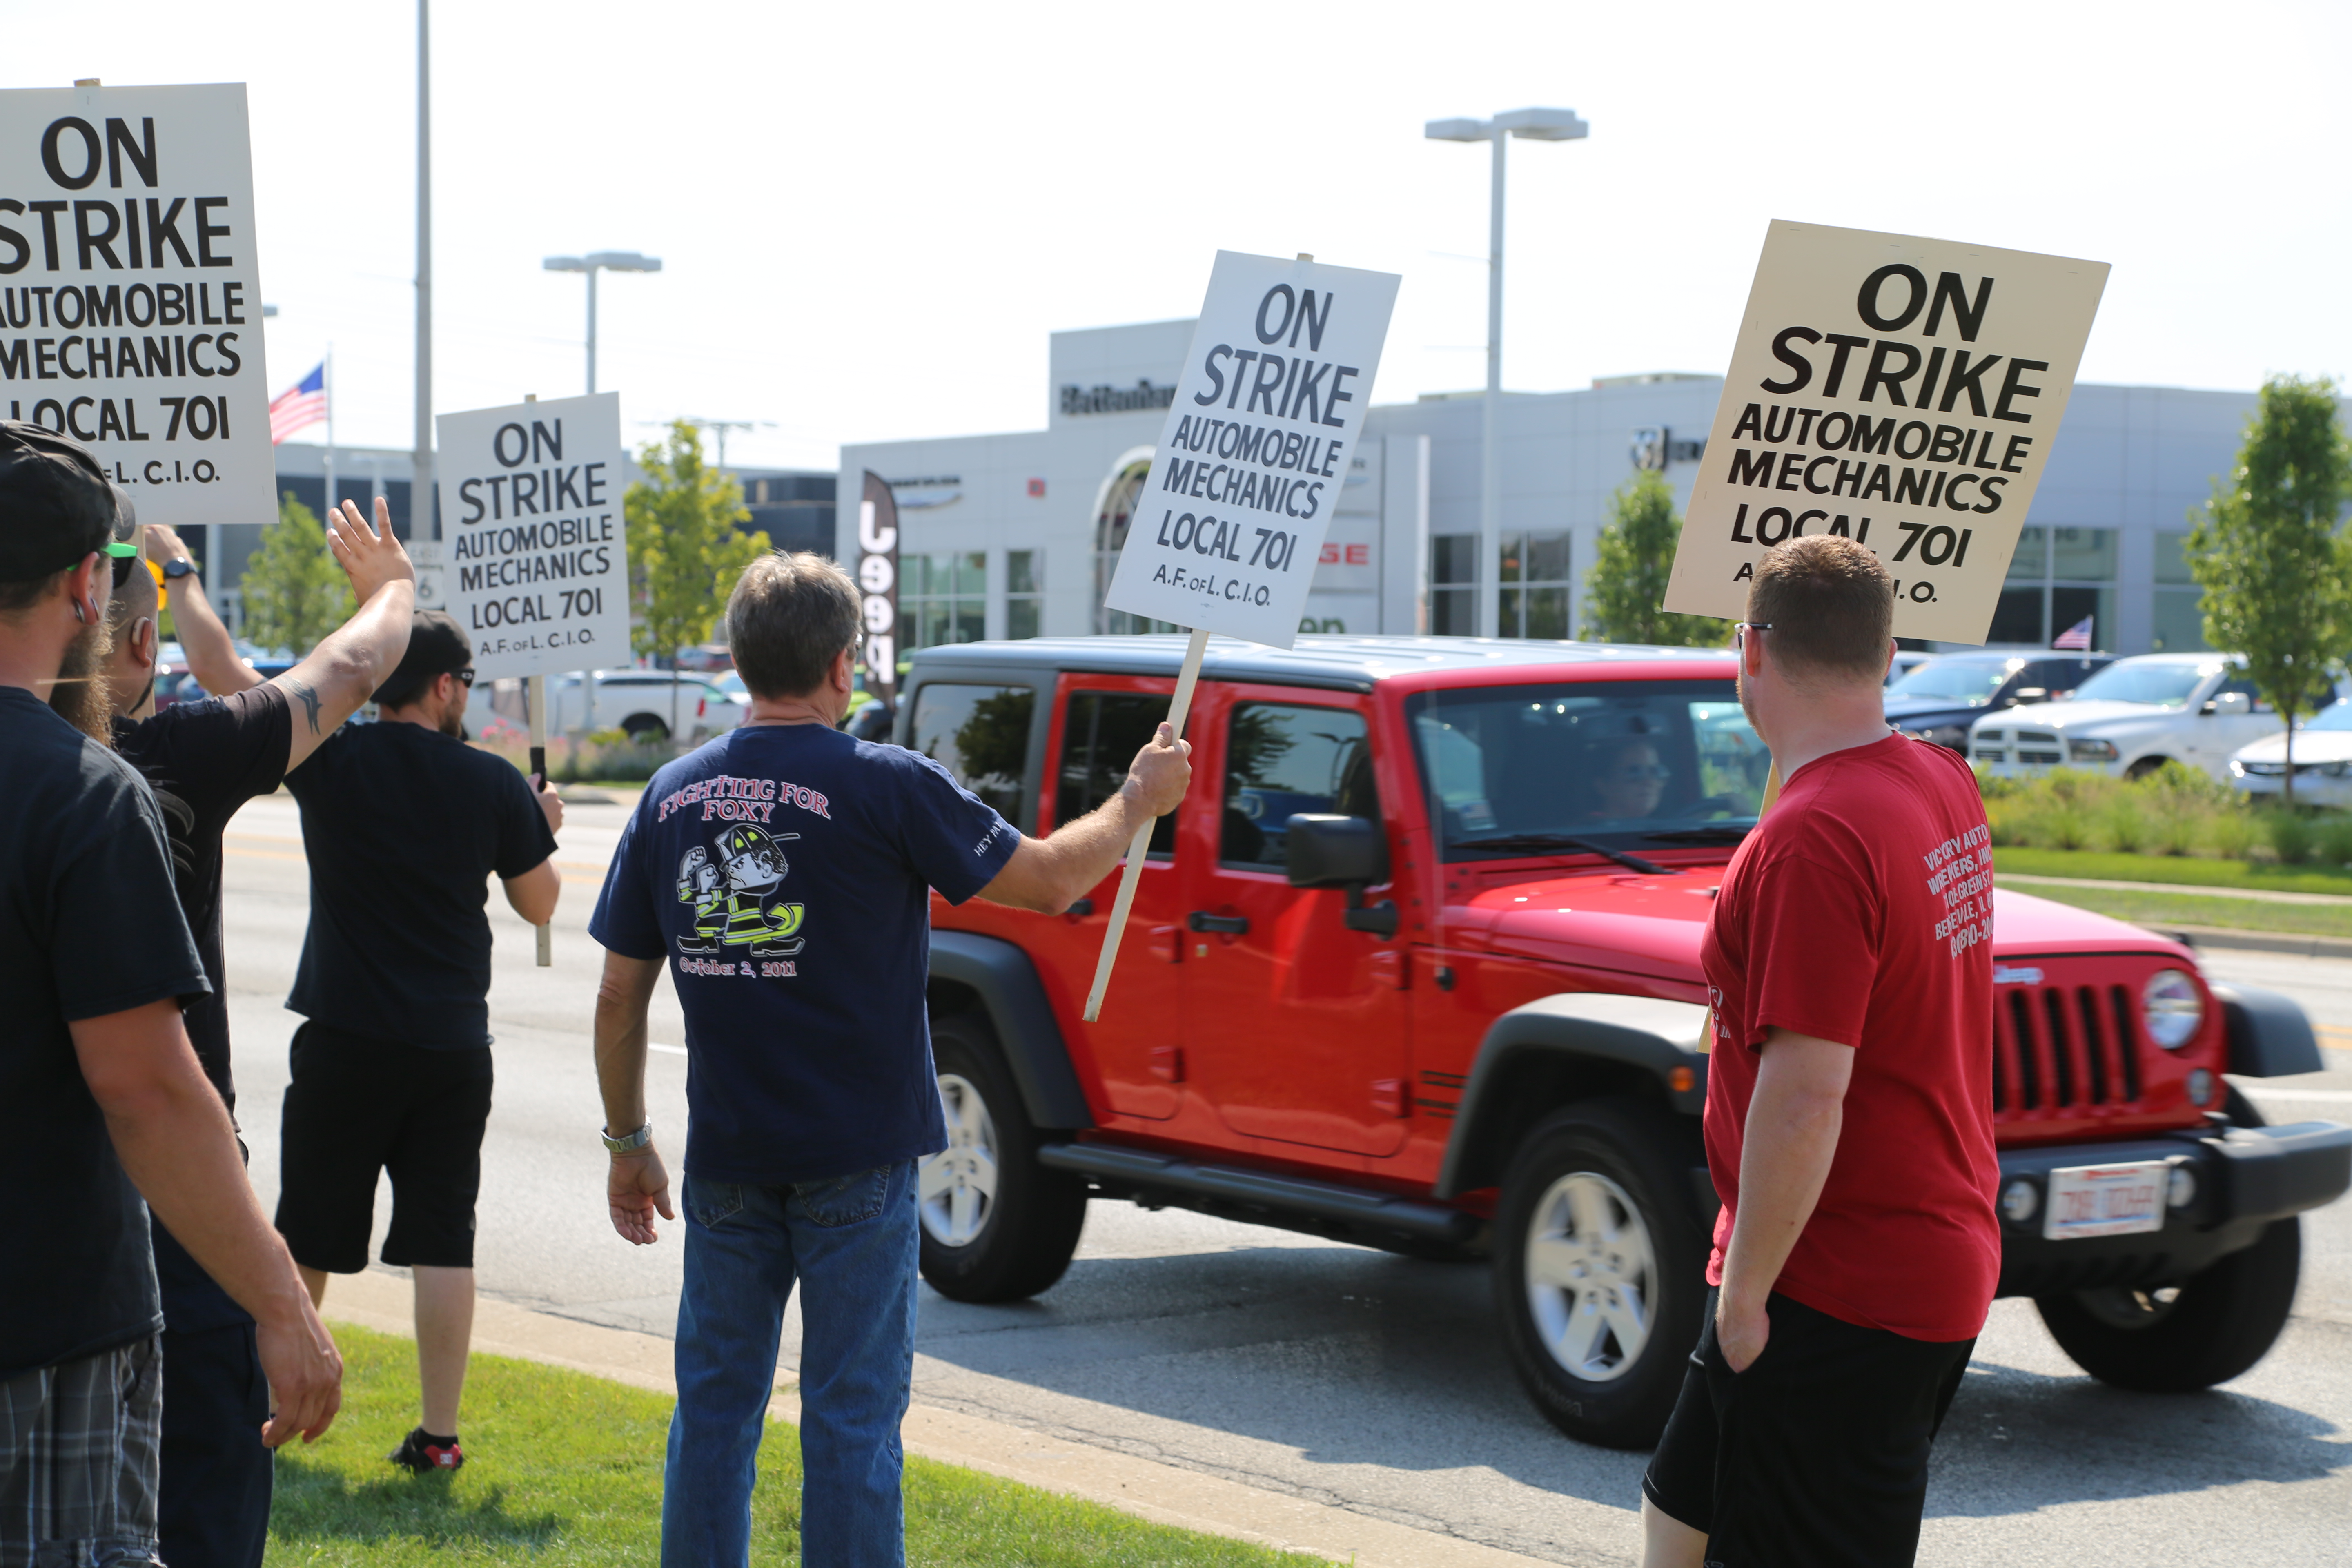 Local 701 Auto Mechanics on Strike for Fair Work Schedule -